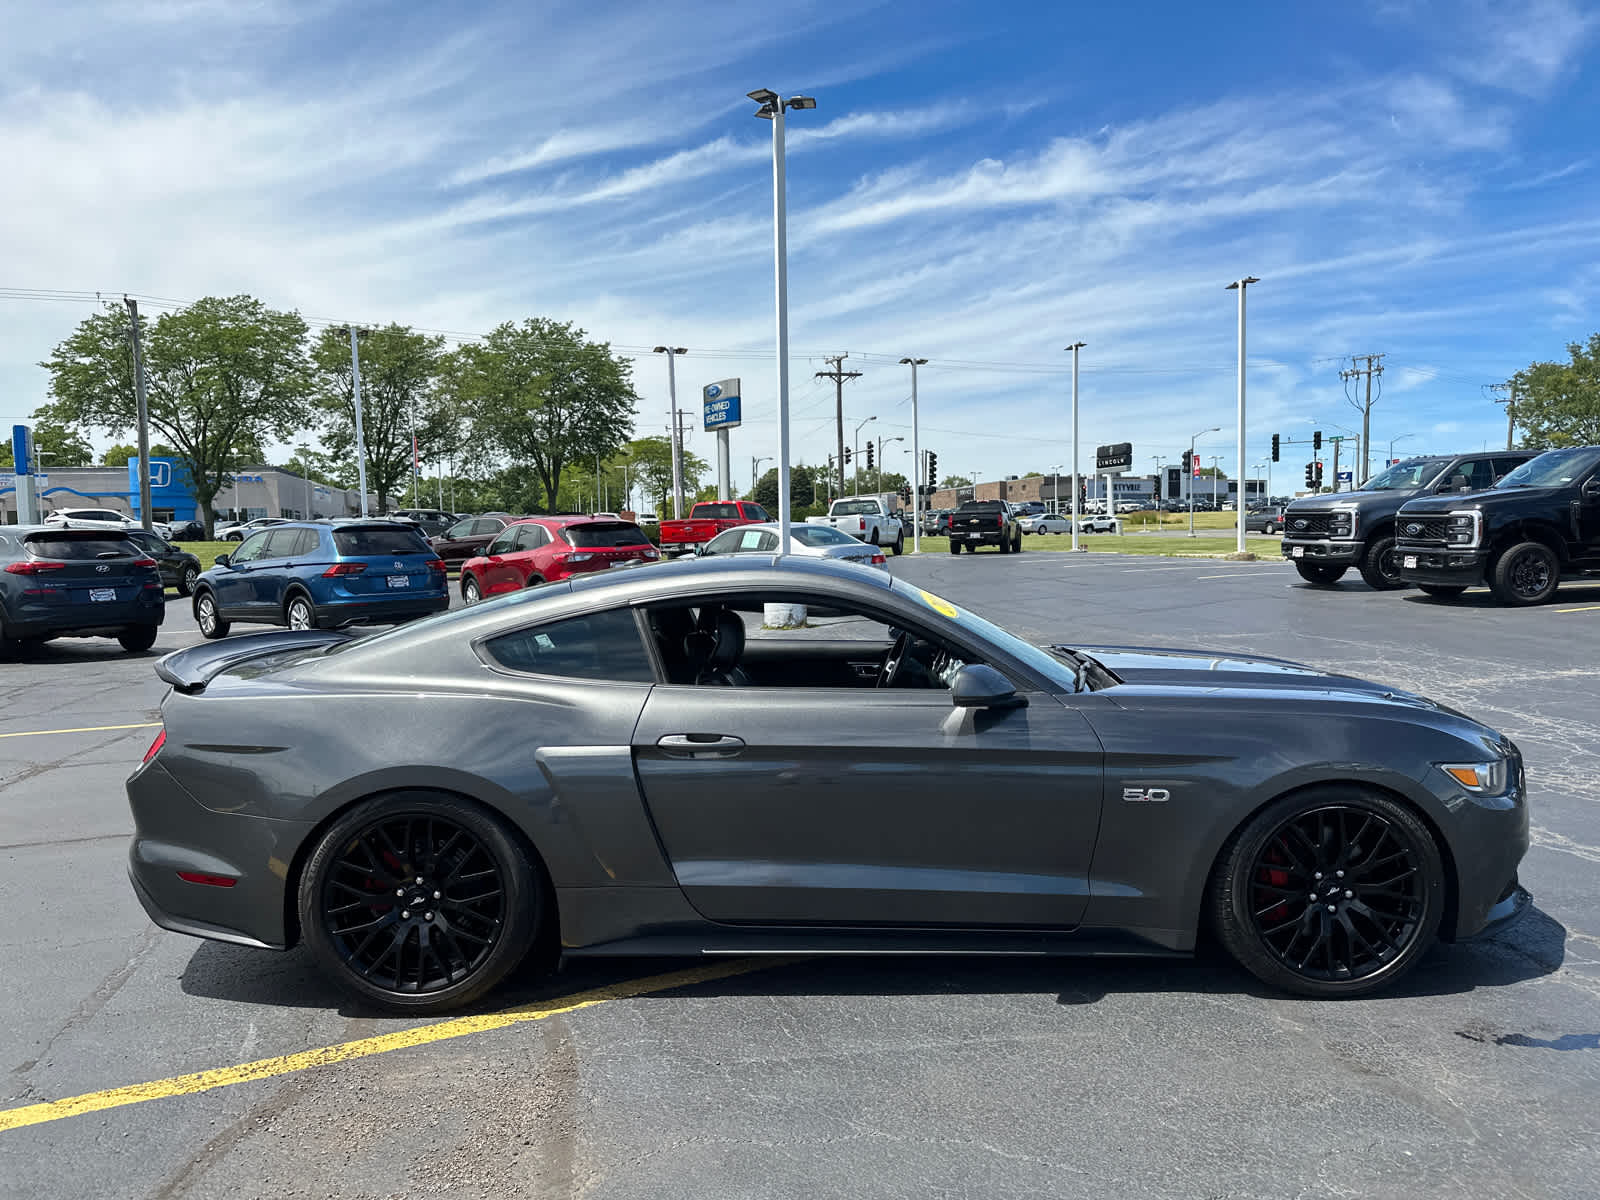 2015 Ford Mustang GT Premium 9